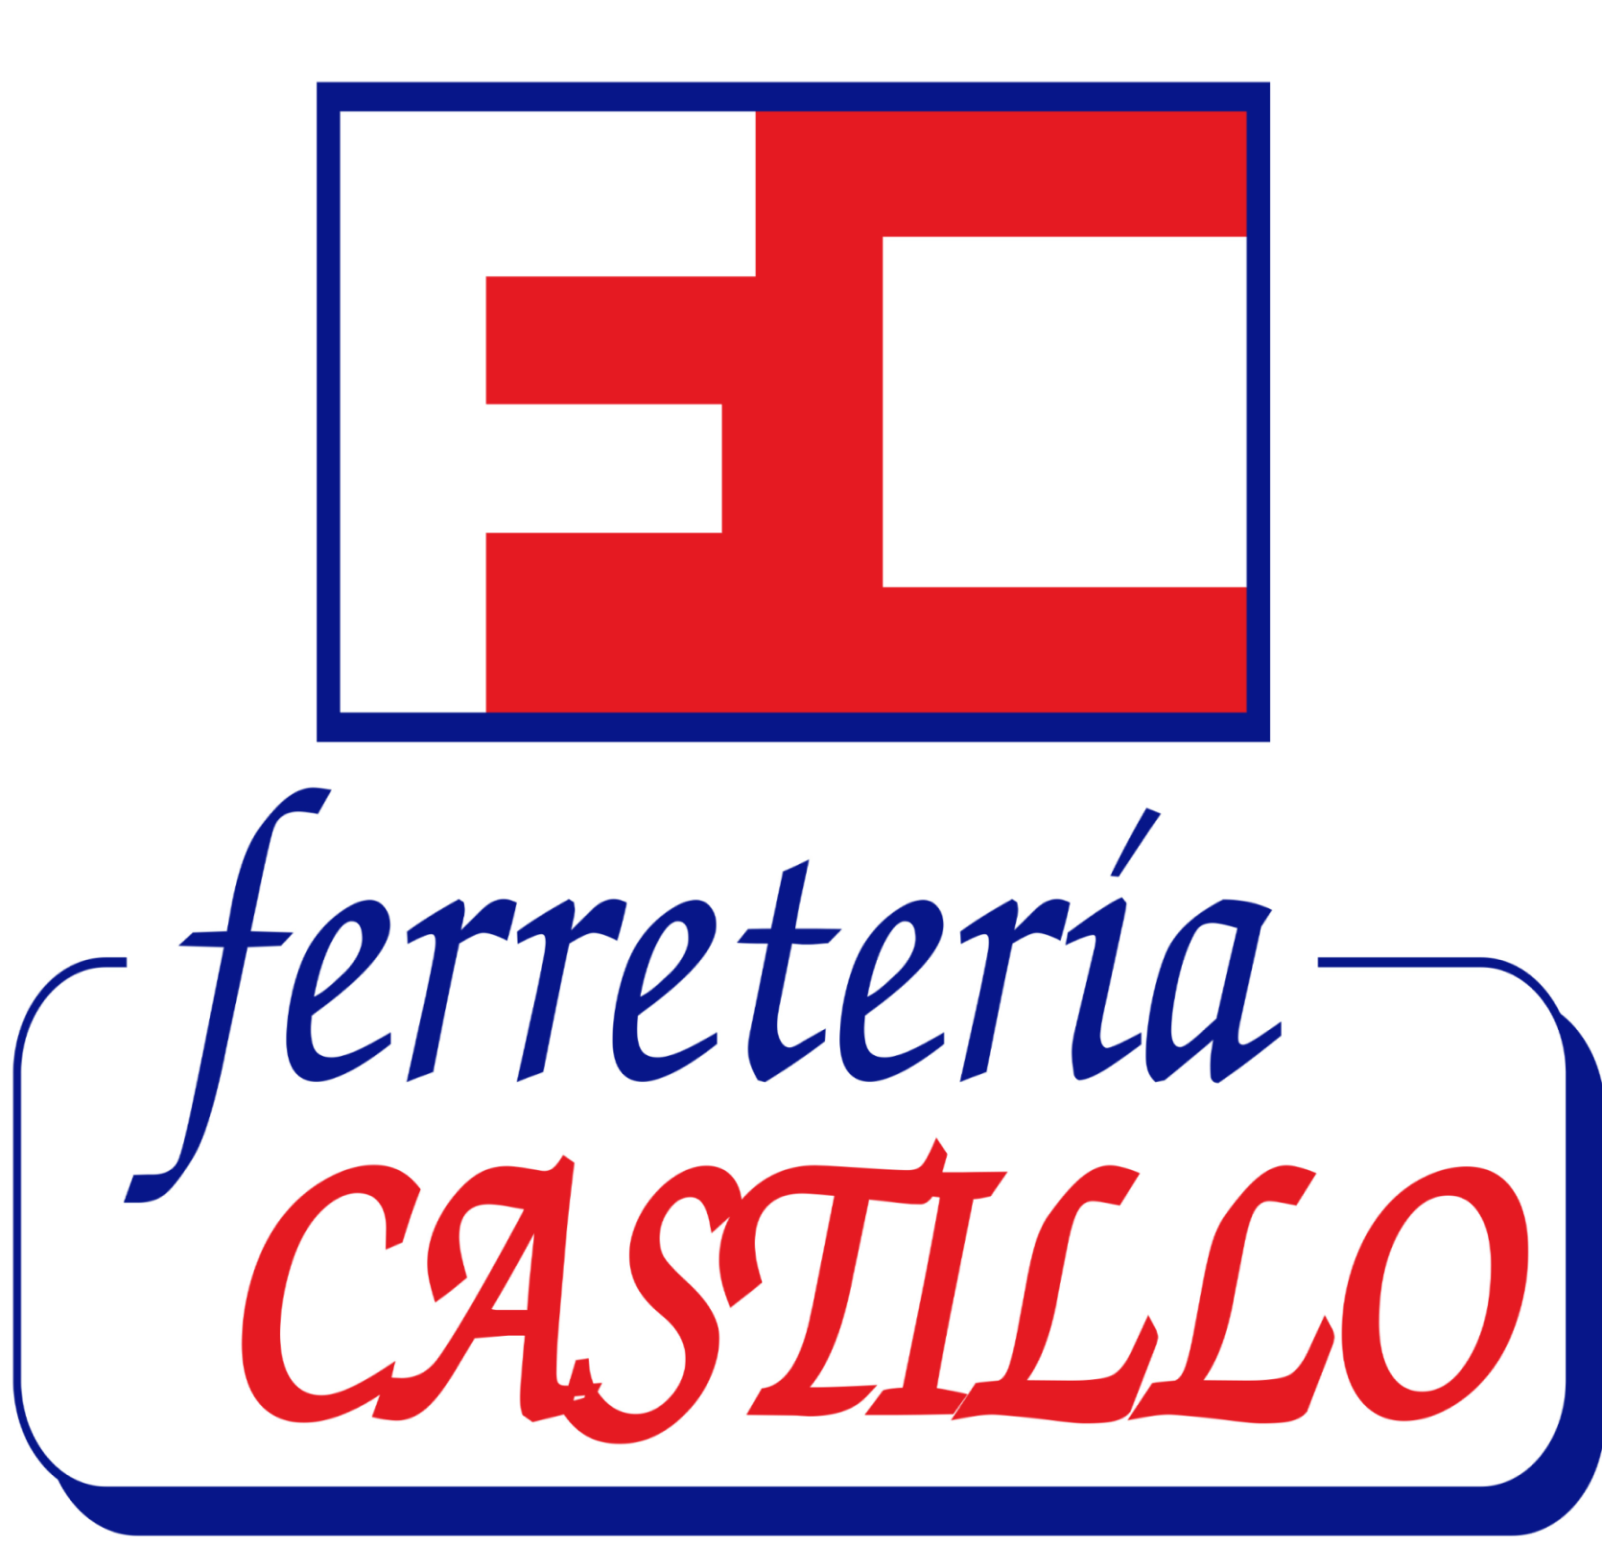 Images Ferretería Castillo